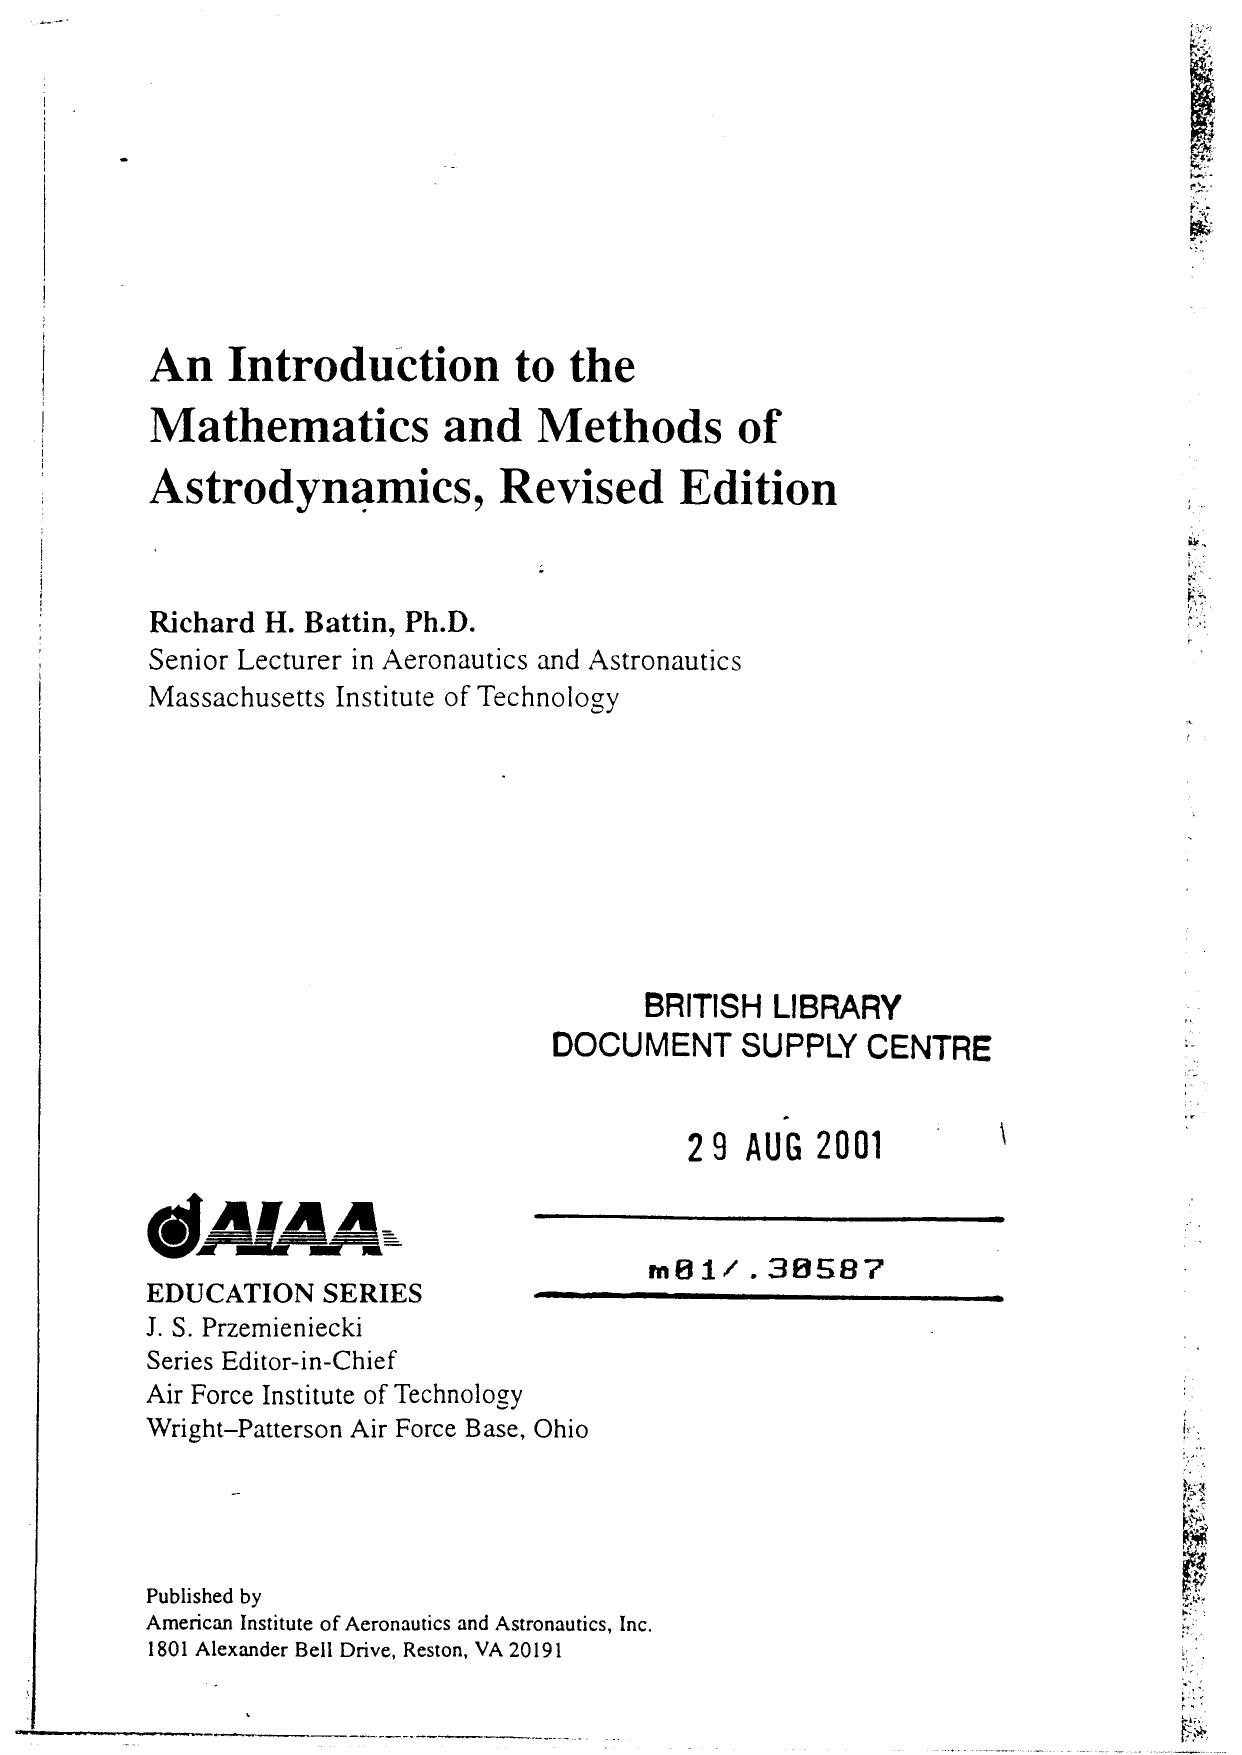 An introduction to the mathematics and methods of astrodynamics-American Institute of Aeronautics and Astronautics (2014)